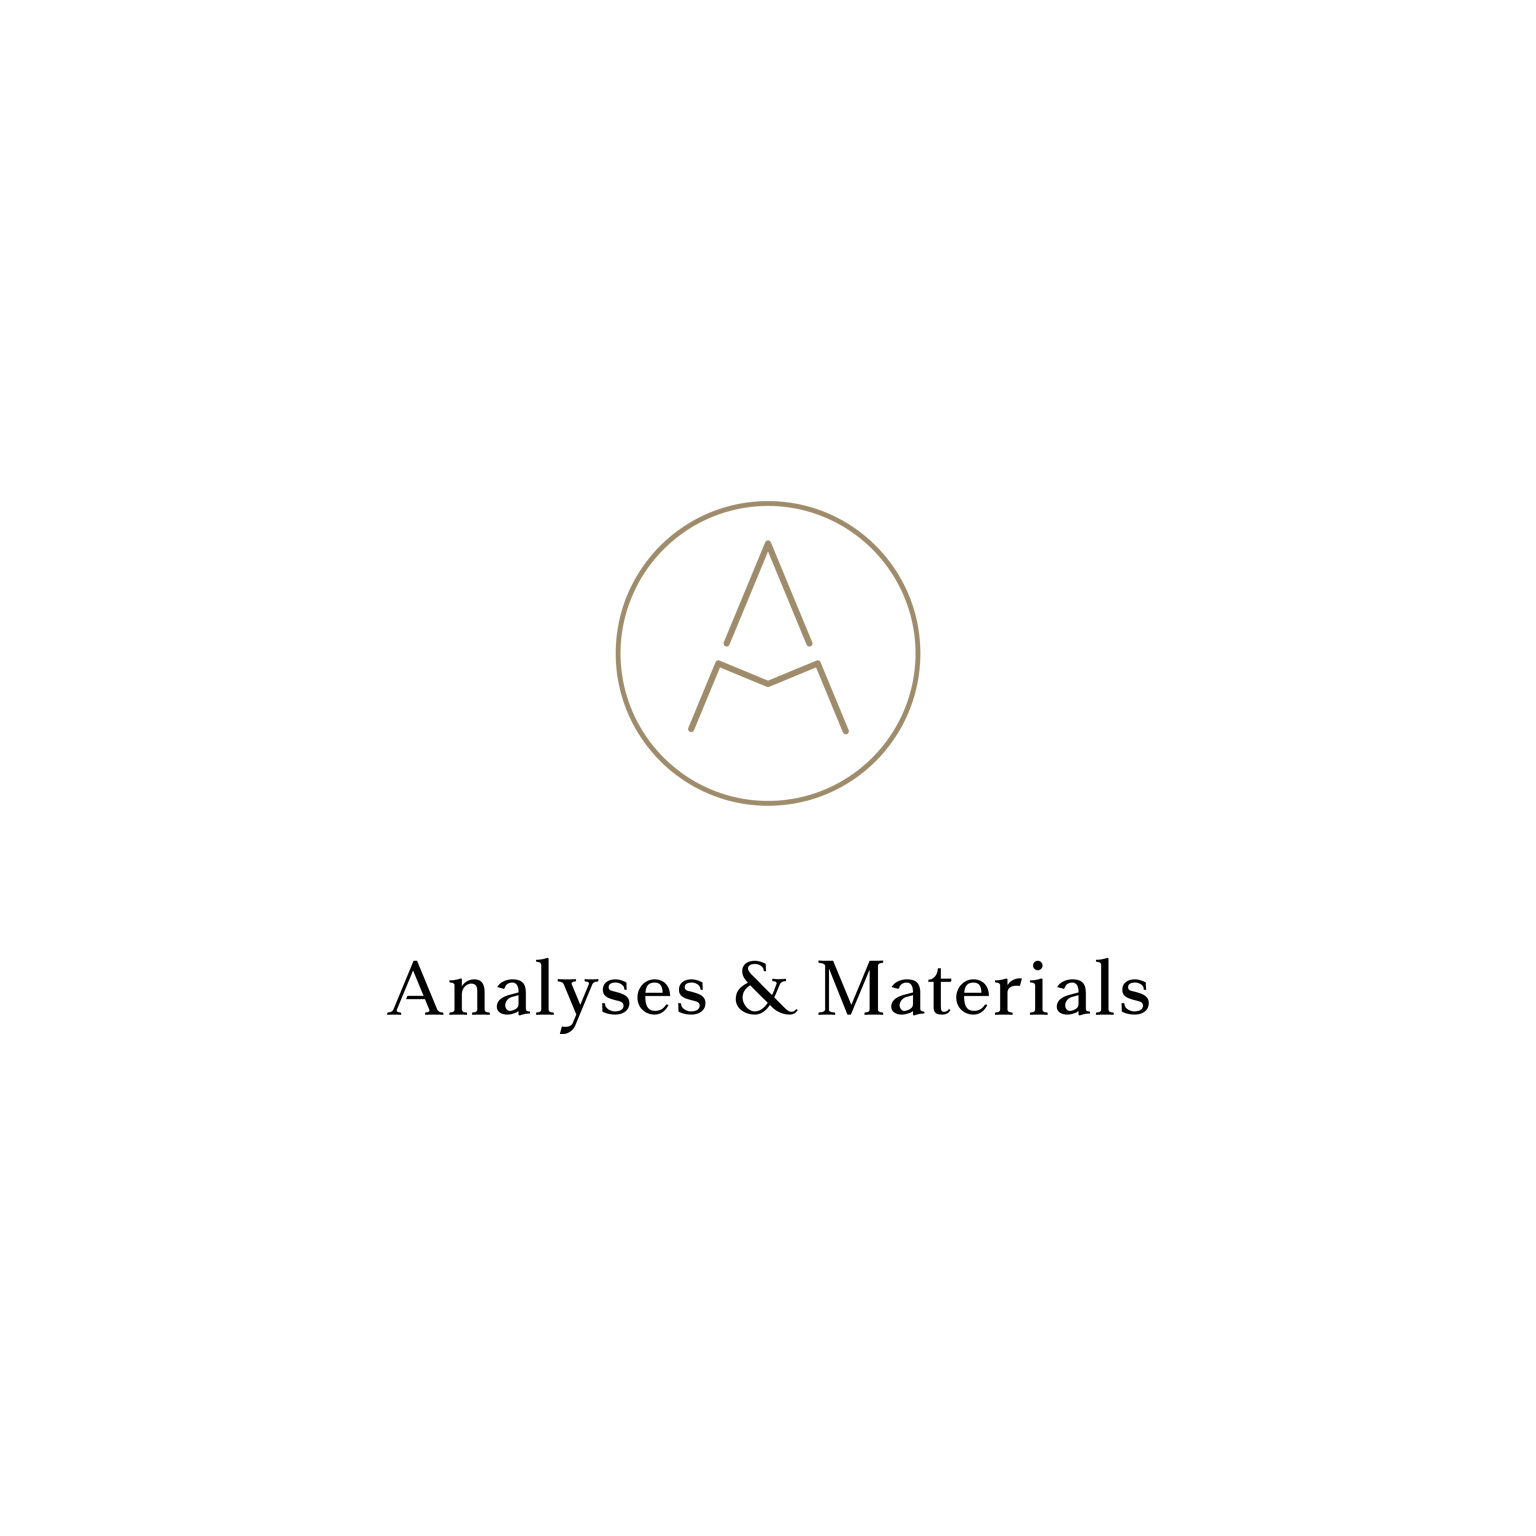 Analyses & Materials